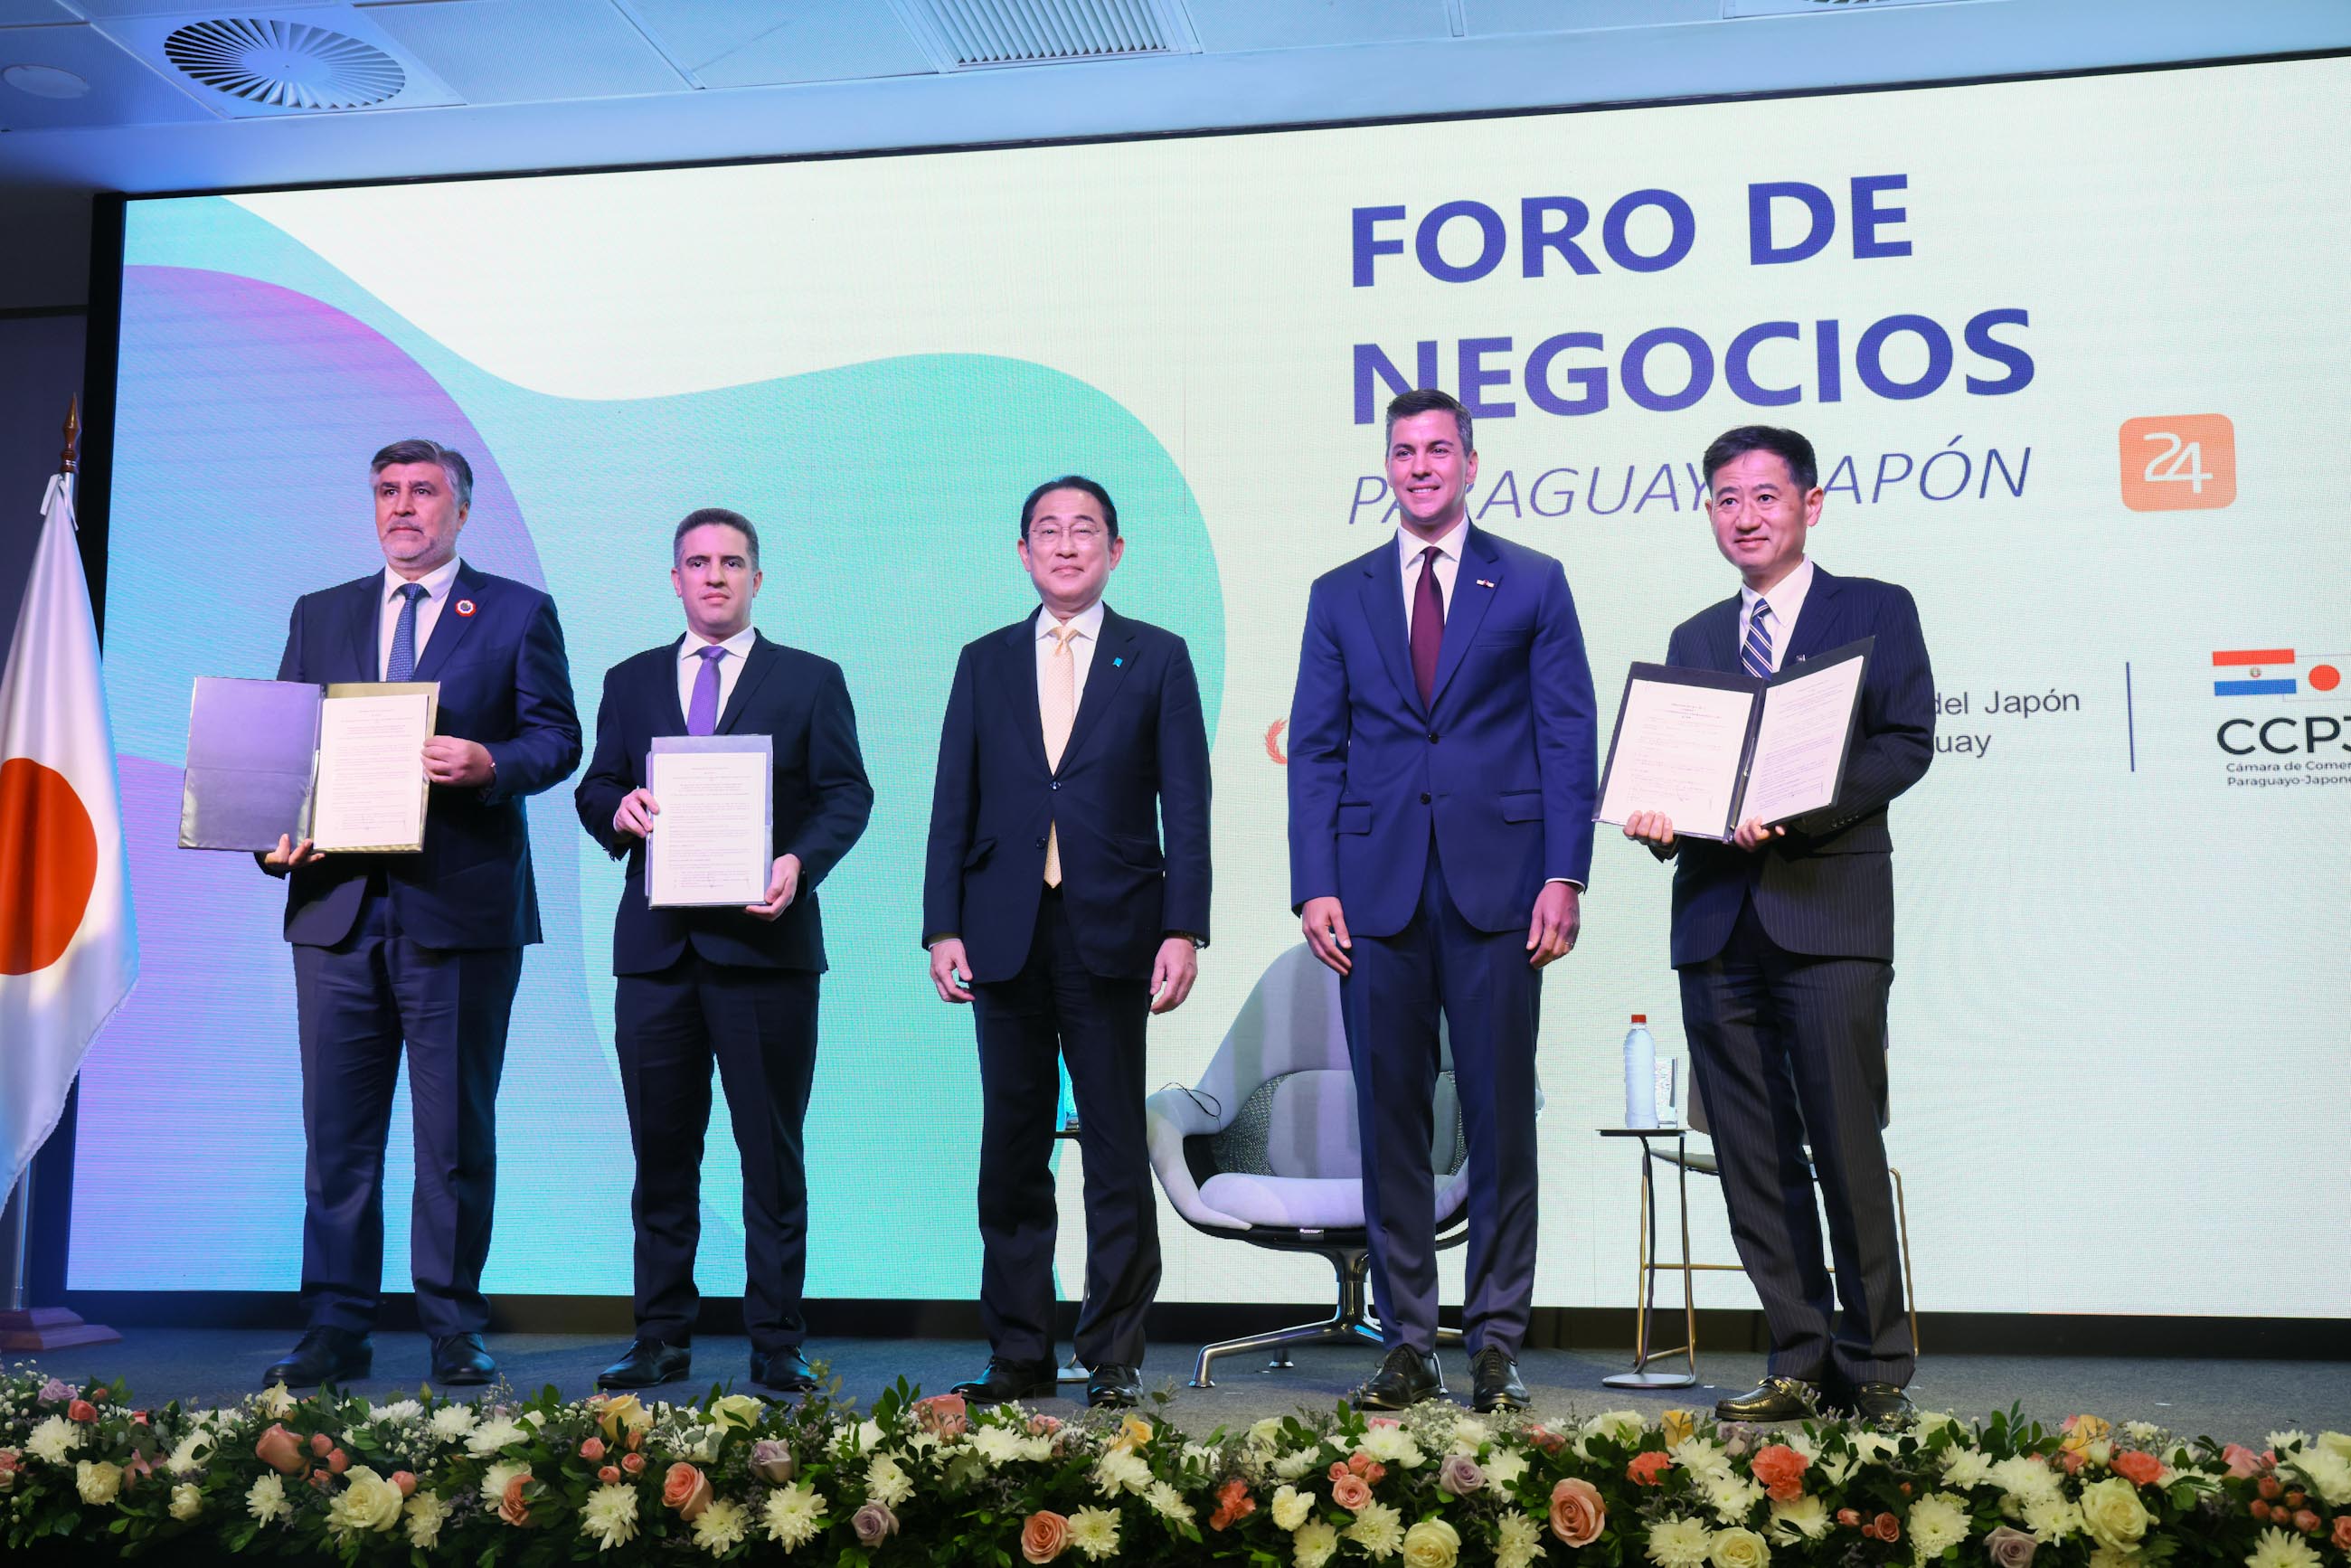 Japan-Paraguay Business Forum and memorandum announcement ceremony (2)